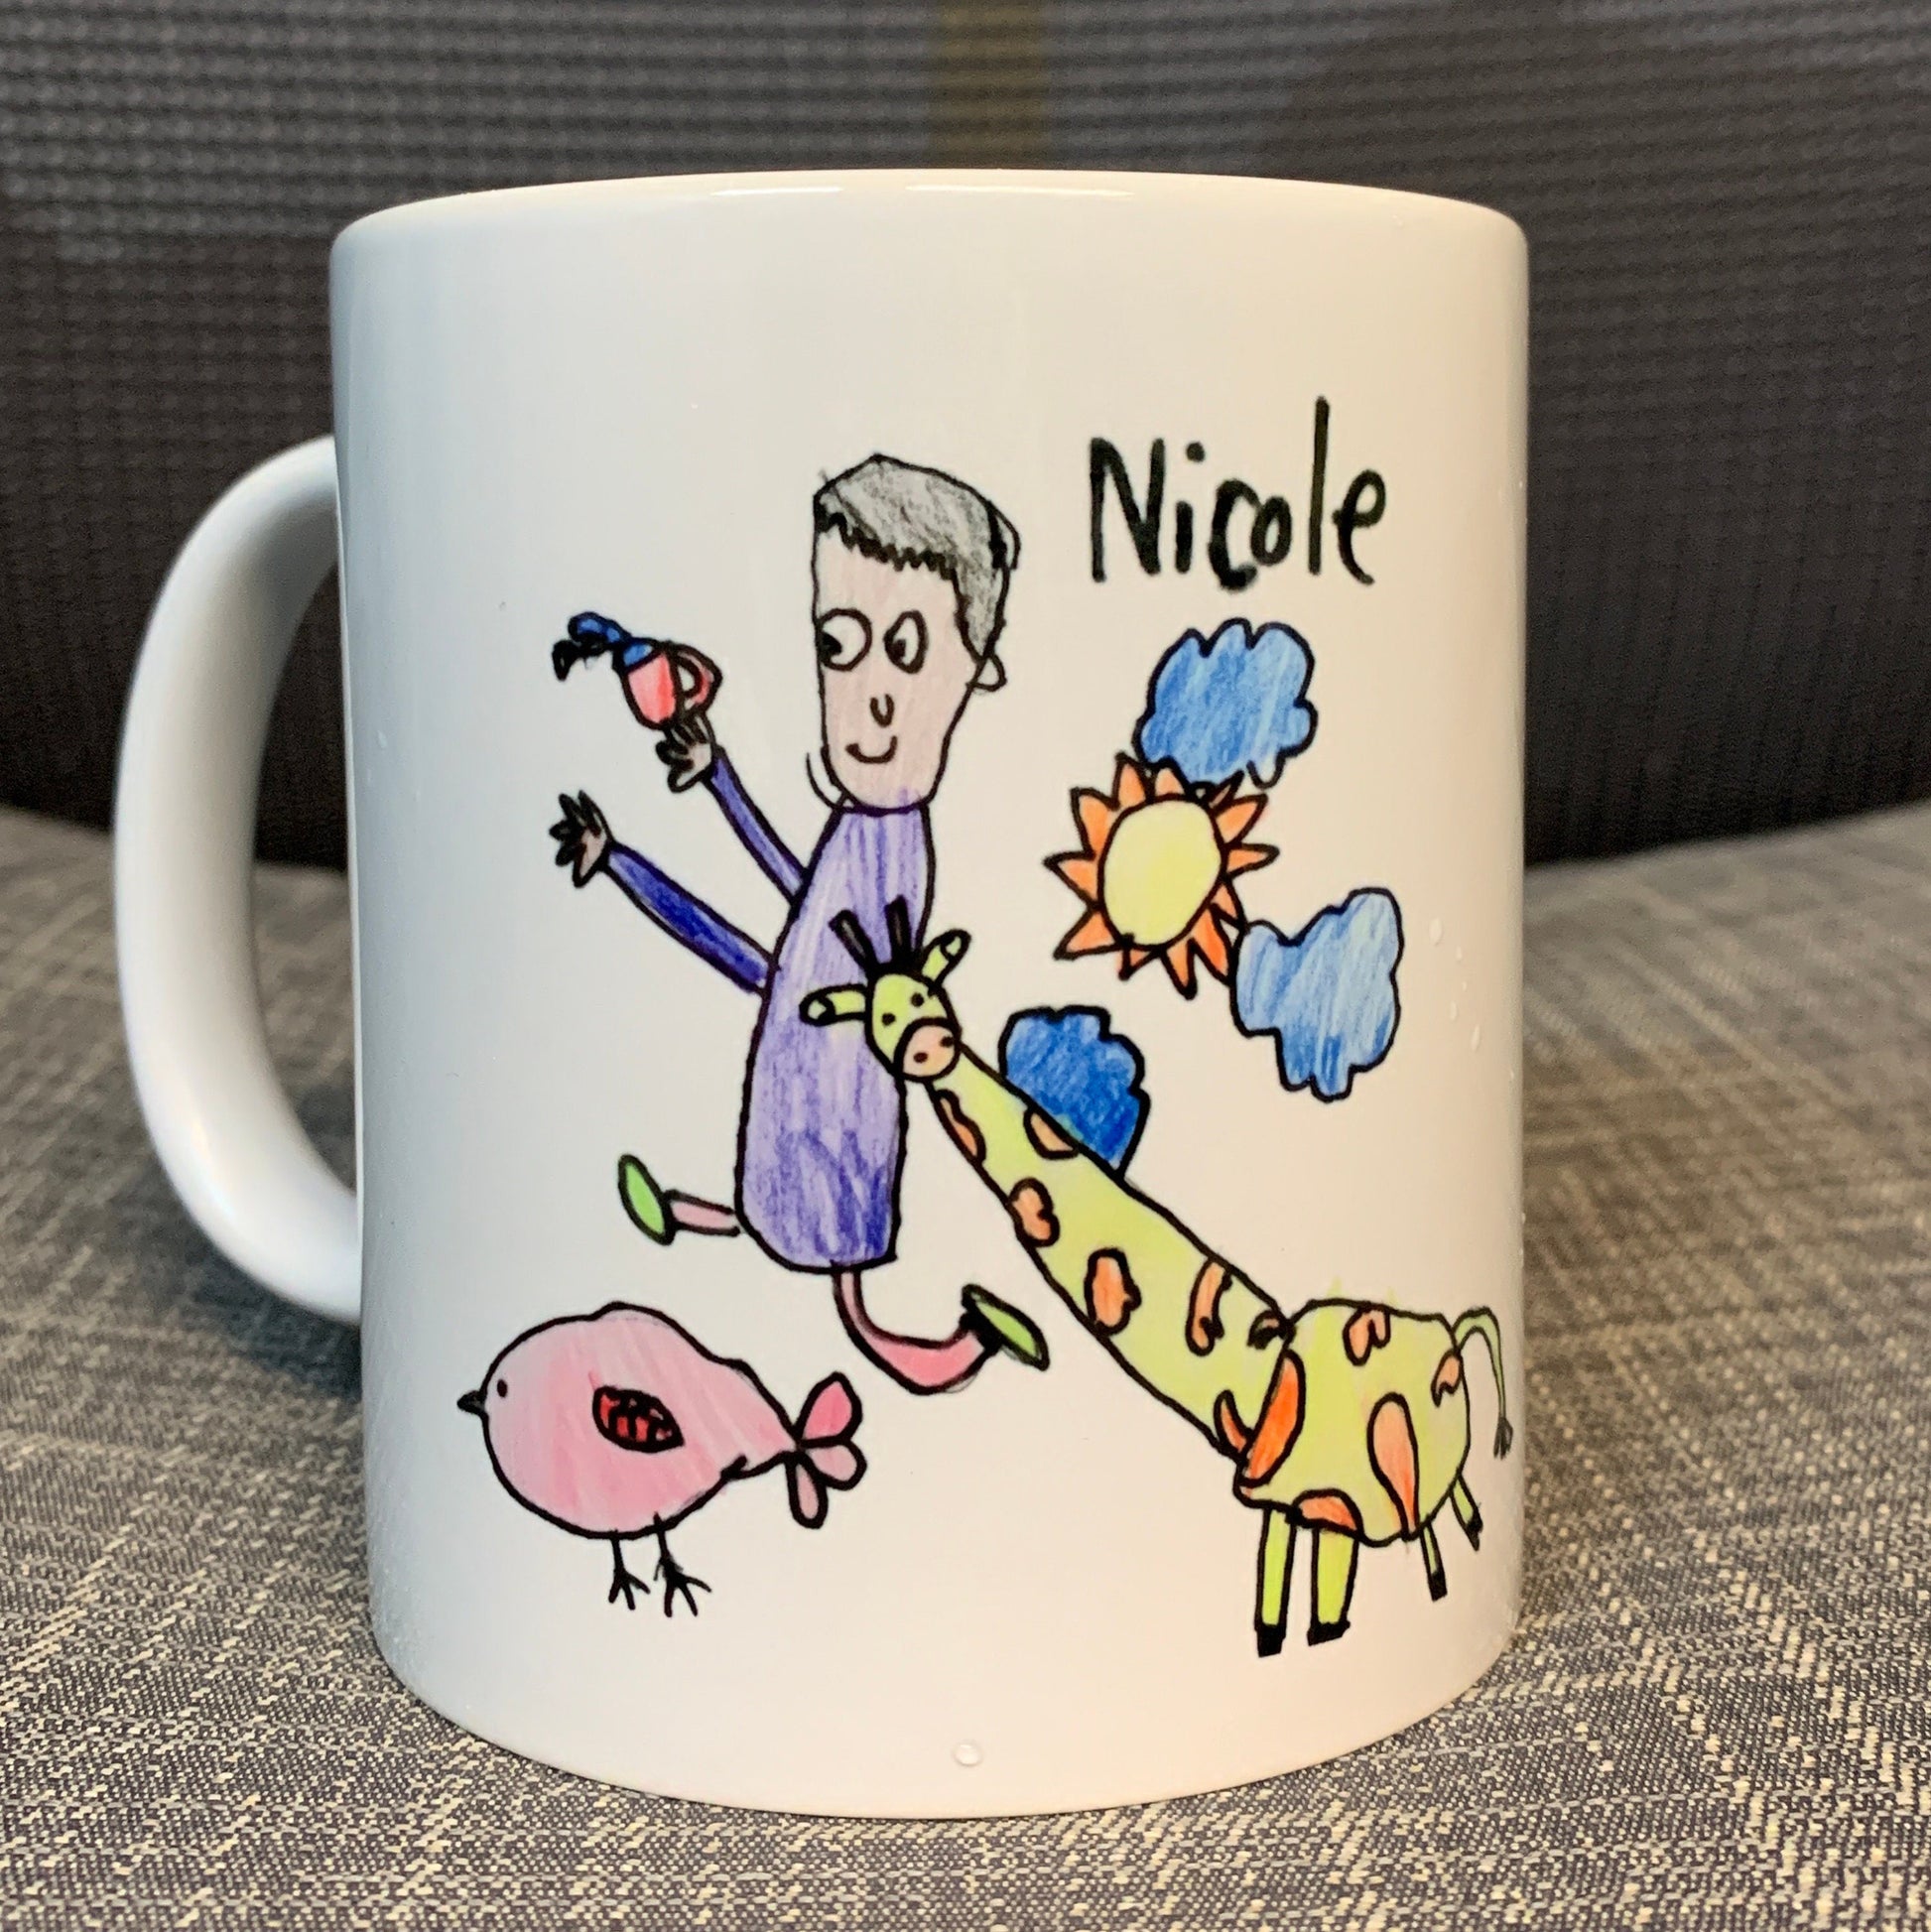 Custom Artwork on a Mug, Coffee Mug Gift Ideas by Kid,  Personalized Gift for Parents - 11 oz.